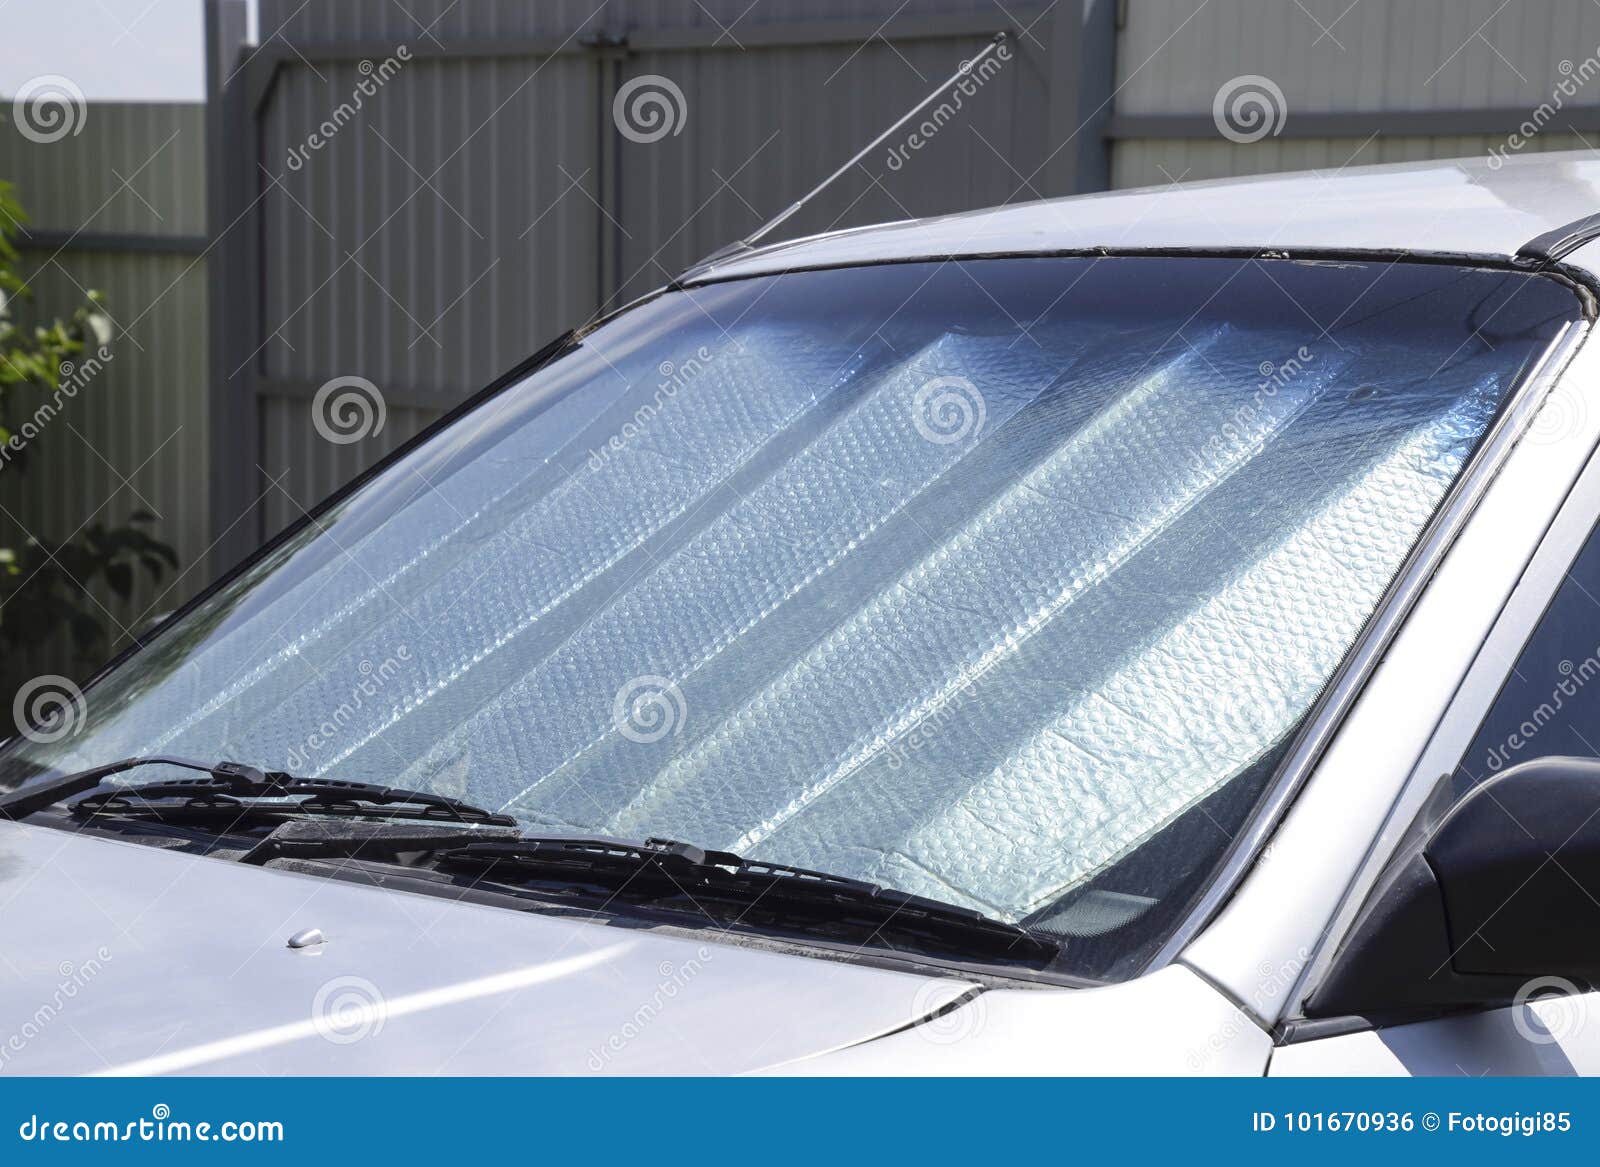 https://thumbs.dreamstime.com/z/sun-reflector-windscreen-protection-car-panel-direct-sunlight-sun-reflector-windscreen-protection-car-panel-101670936.jpg